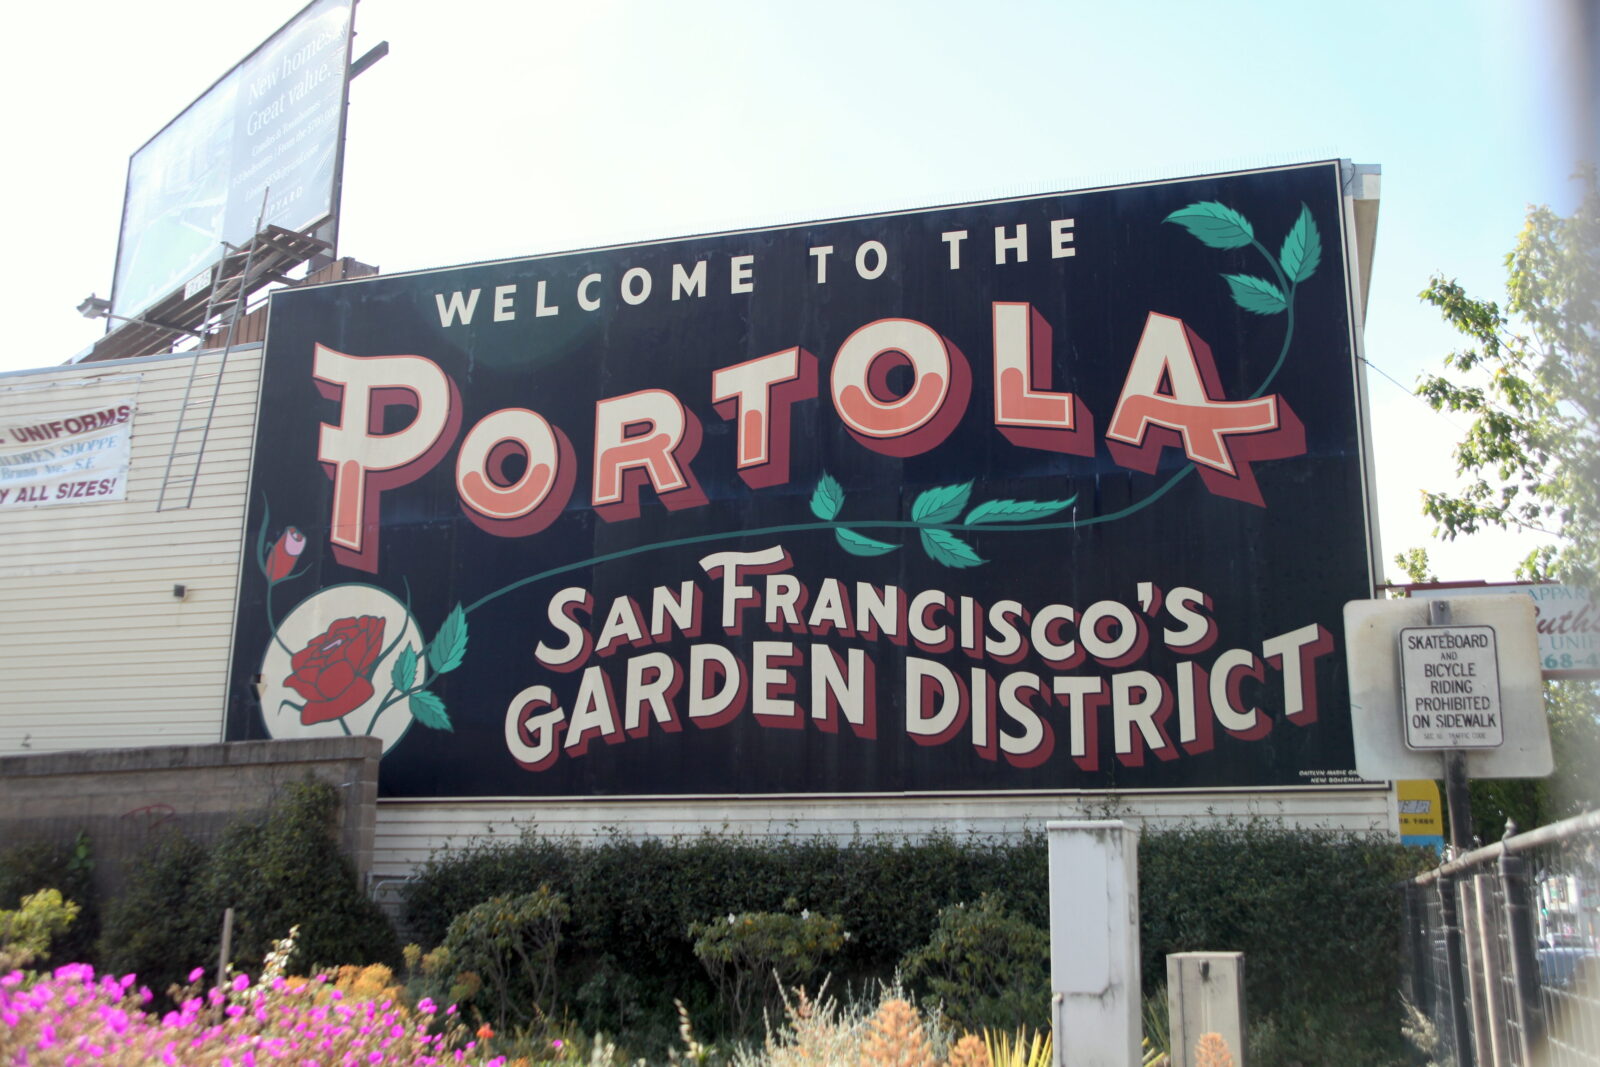 Portola San Francisco’s Garden District